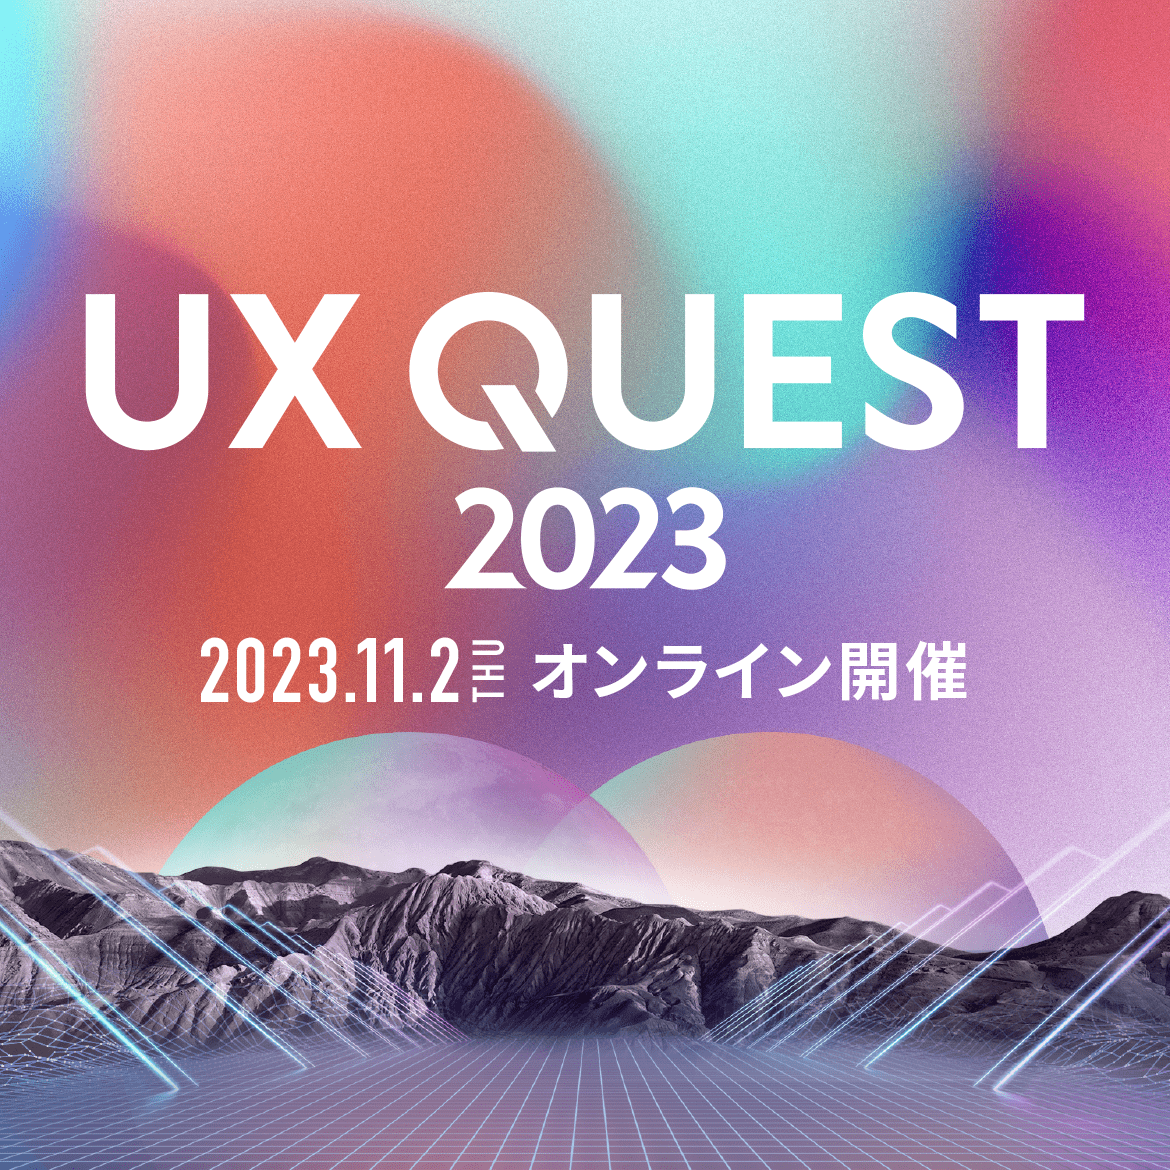 UX QUEST 2022 022.12.1 THU - 12.2 FRI オンライン開催